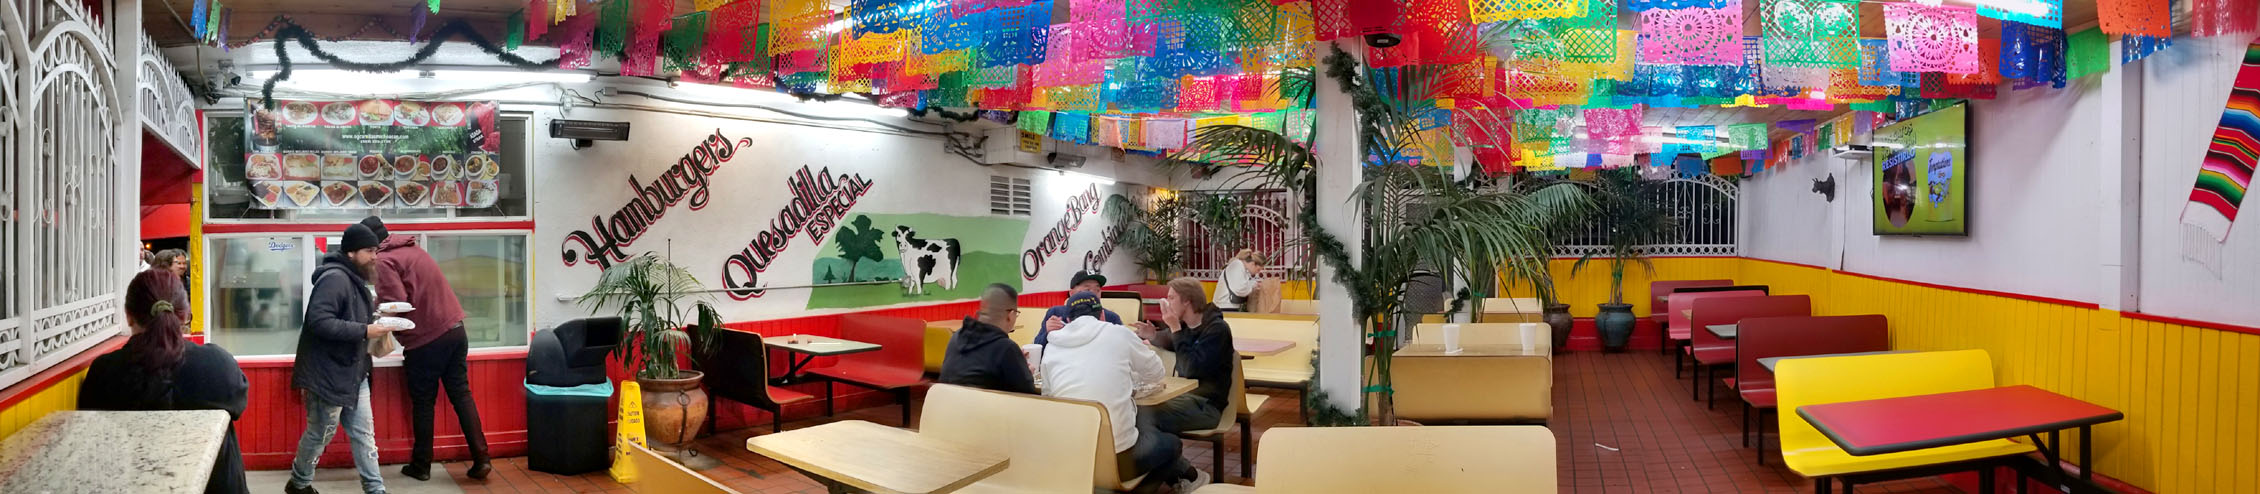 Carnitas Michoacan Dining Room